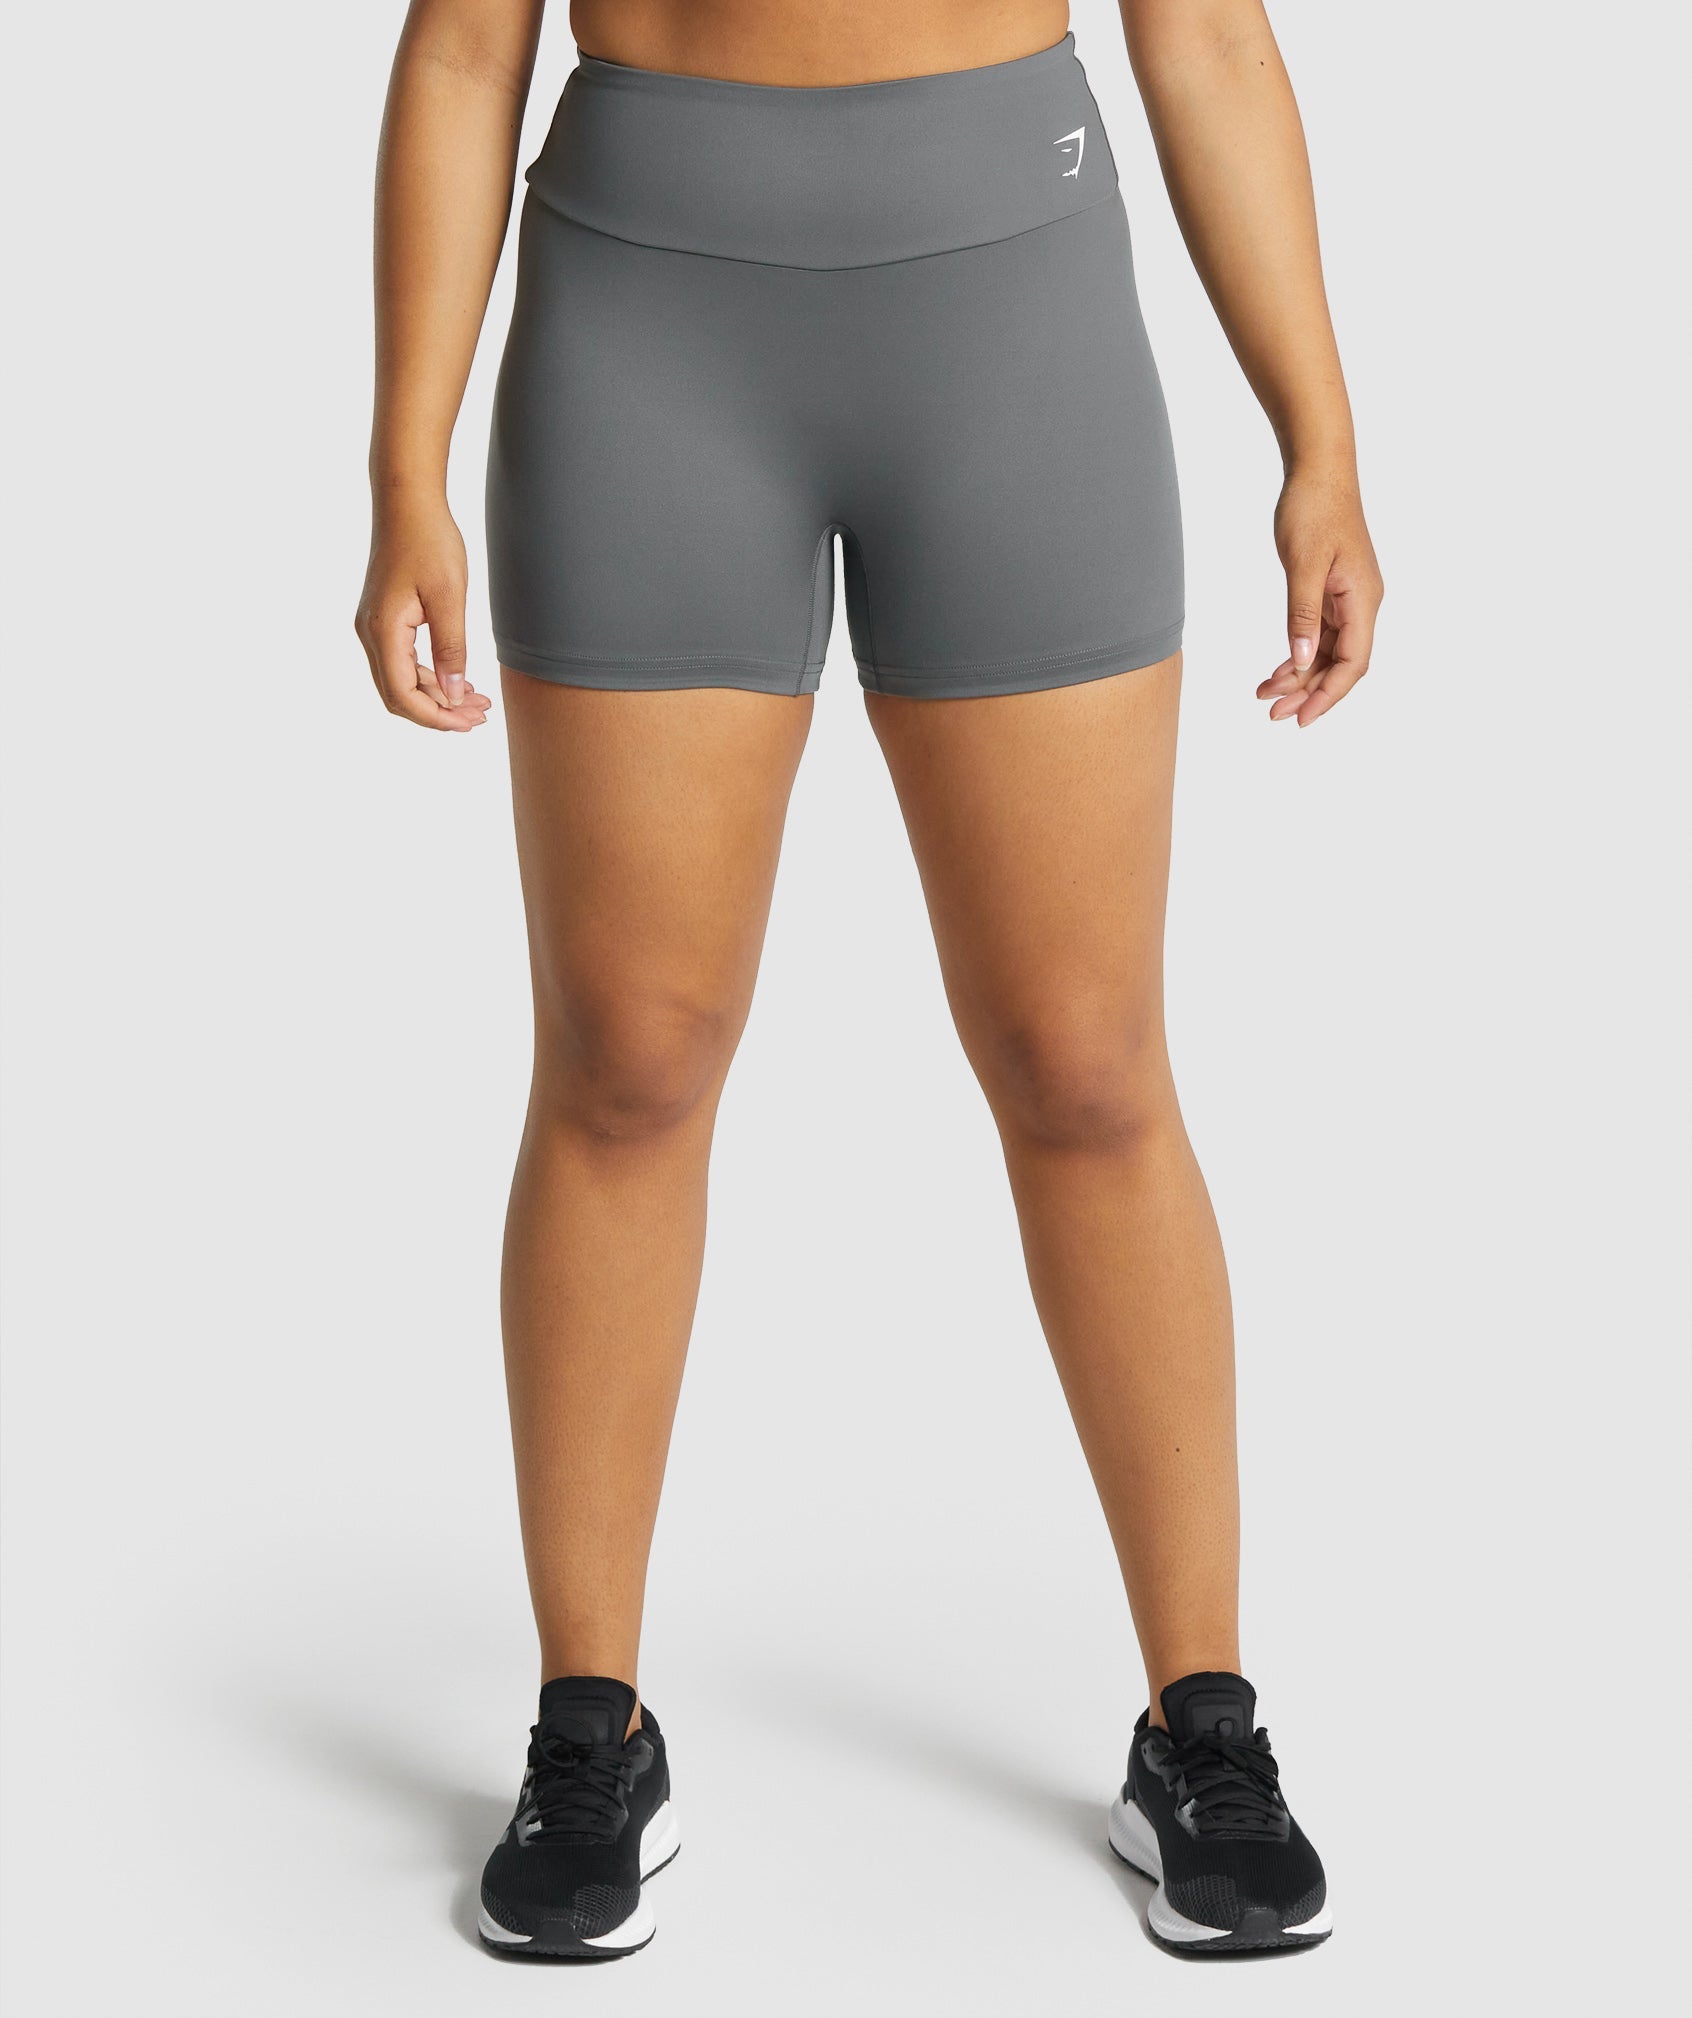 Gymshark Women's Flex Shorts Charcoal Marl Black Pull On Seamless Mid-Rise